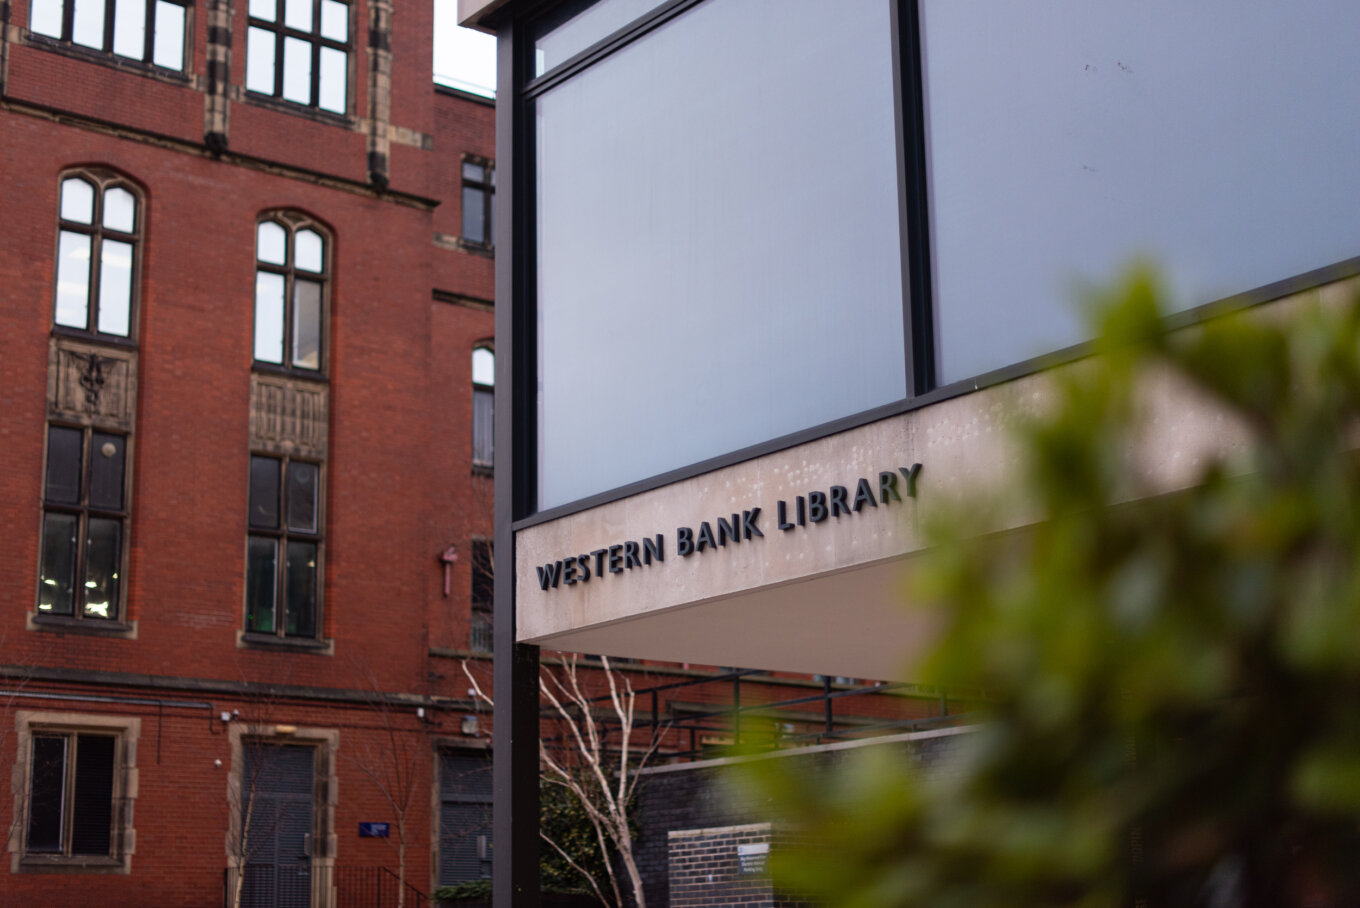 University of sheffield western bank library